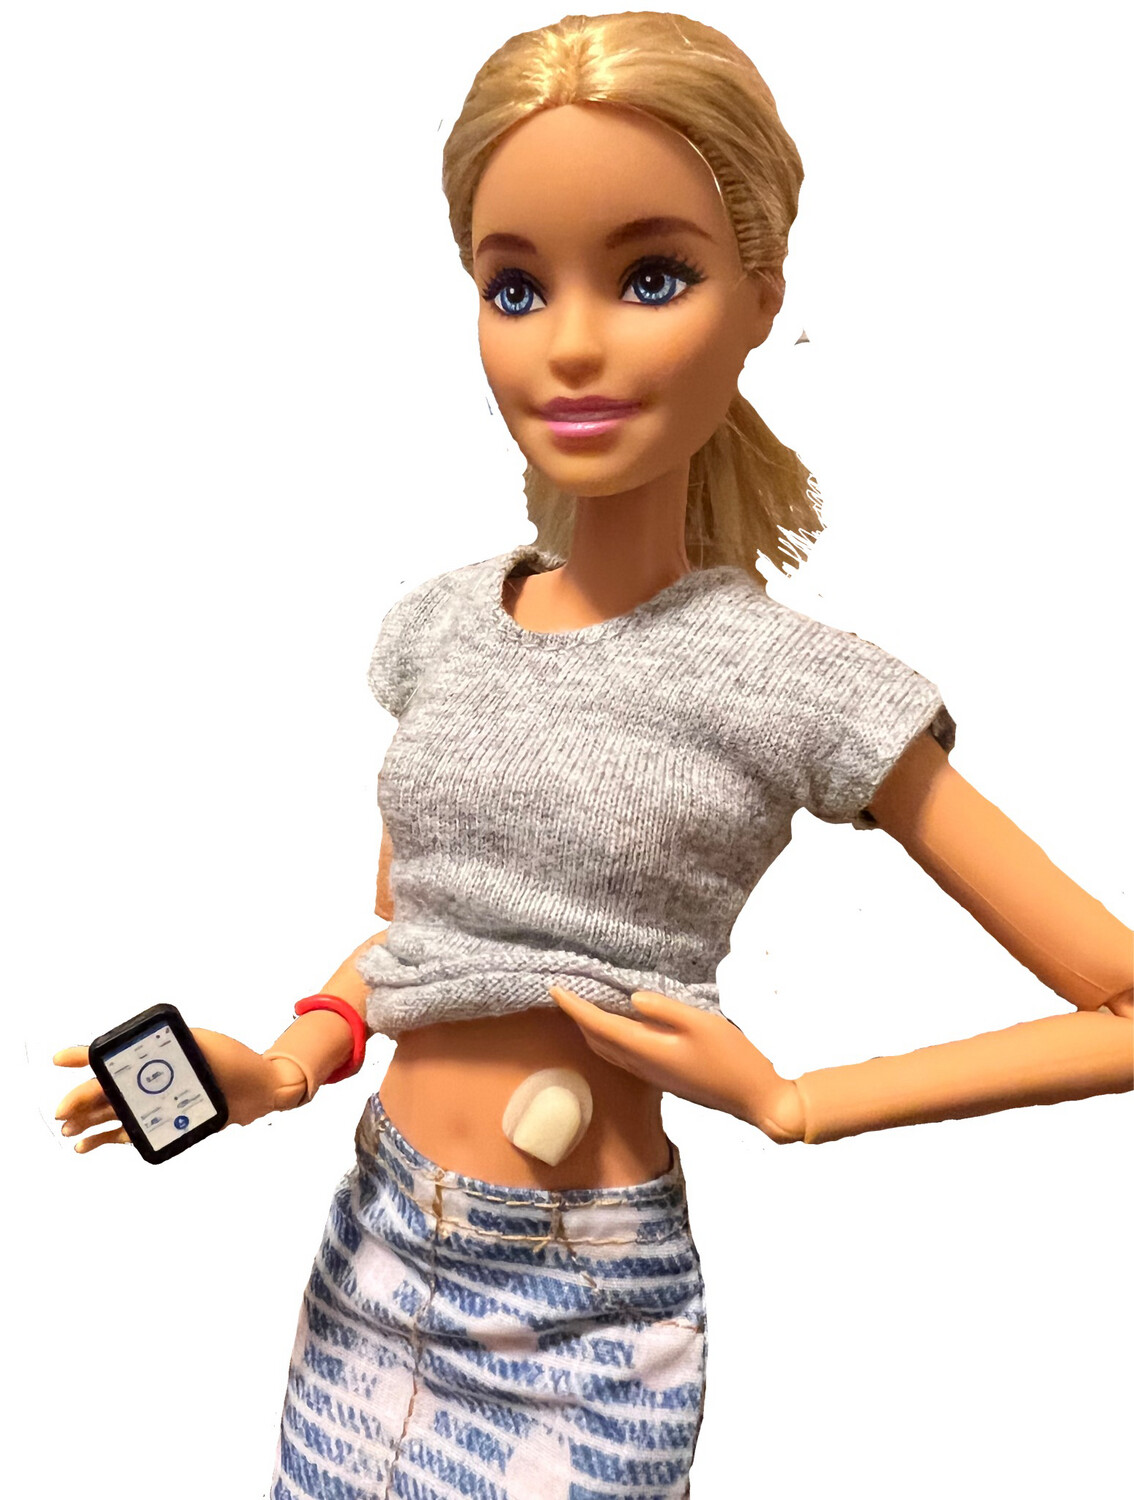 Toy Insulin Pump - Looks Like OmniPod Dash - Barbie/Action Figure Size